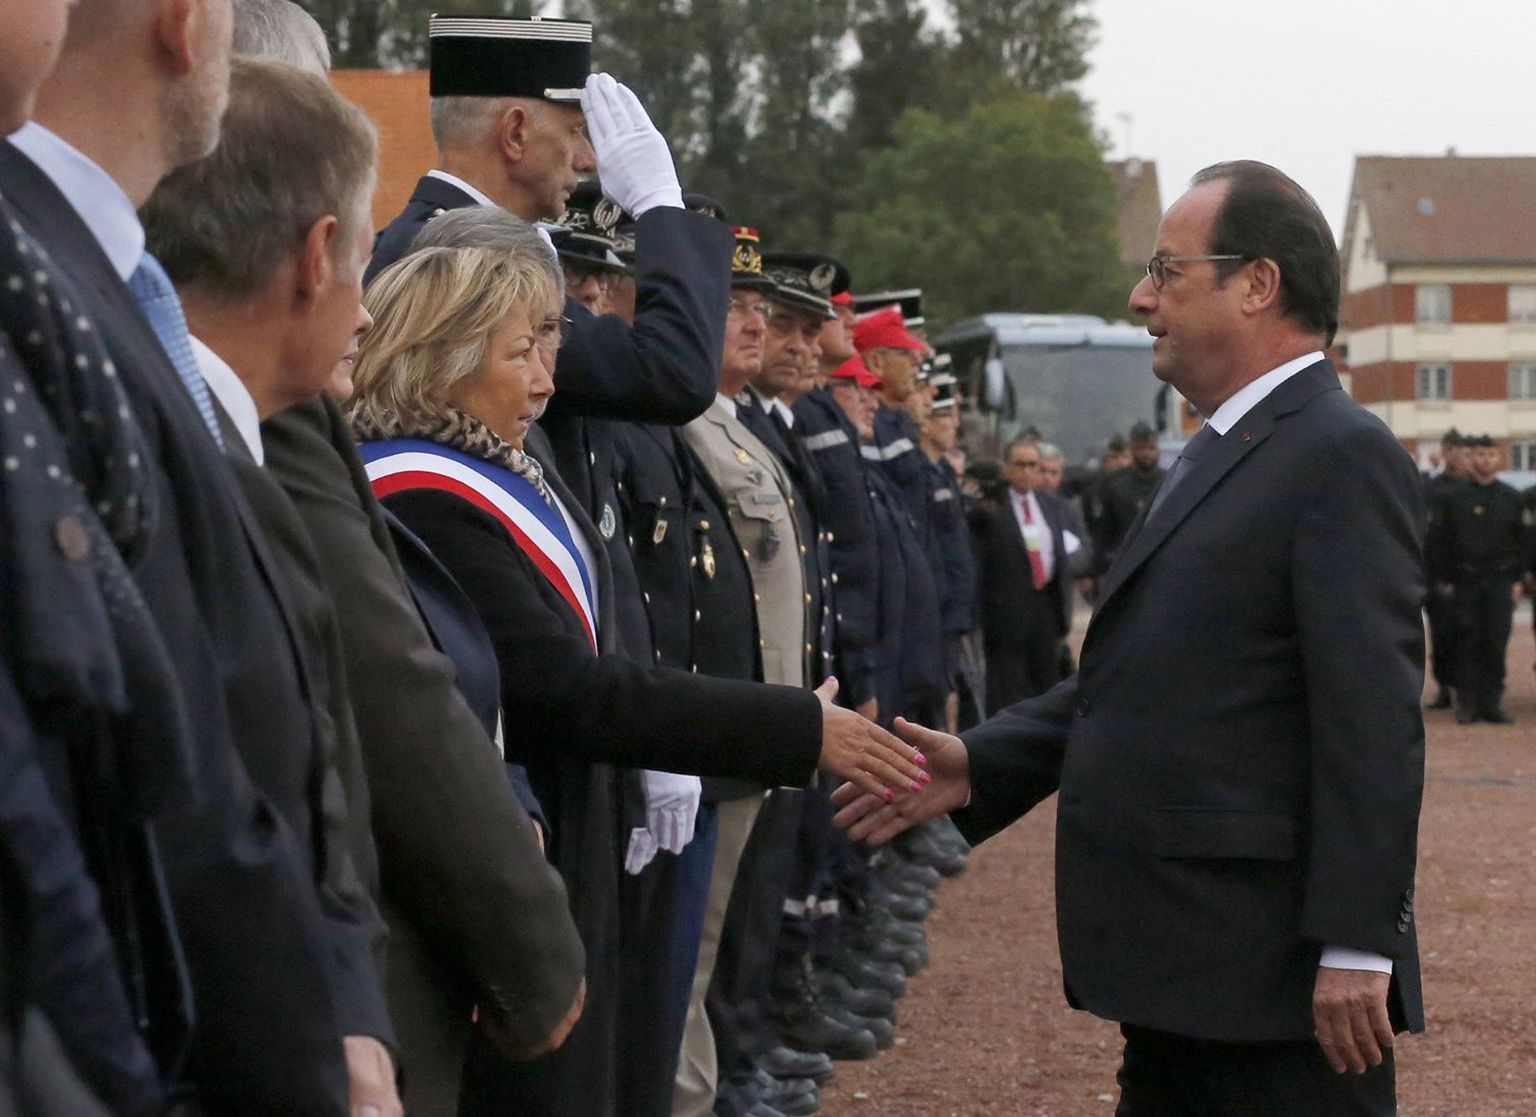 Prantsuse president Francois Hollande kätlemas Calais' linnapead Natacha Bouchart'i